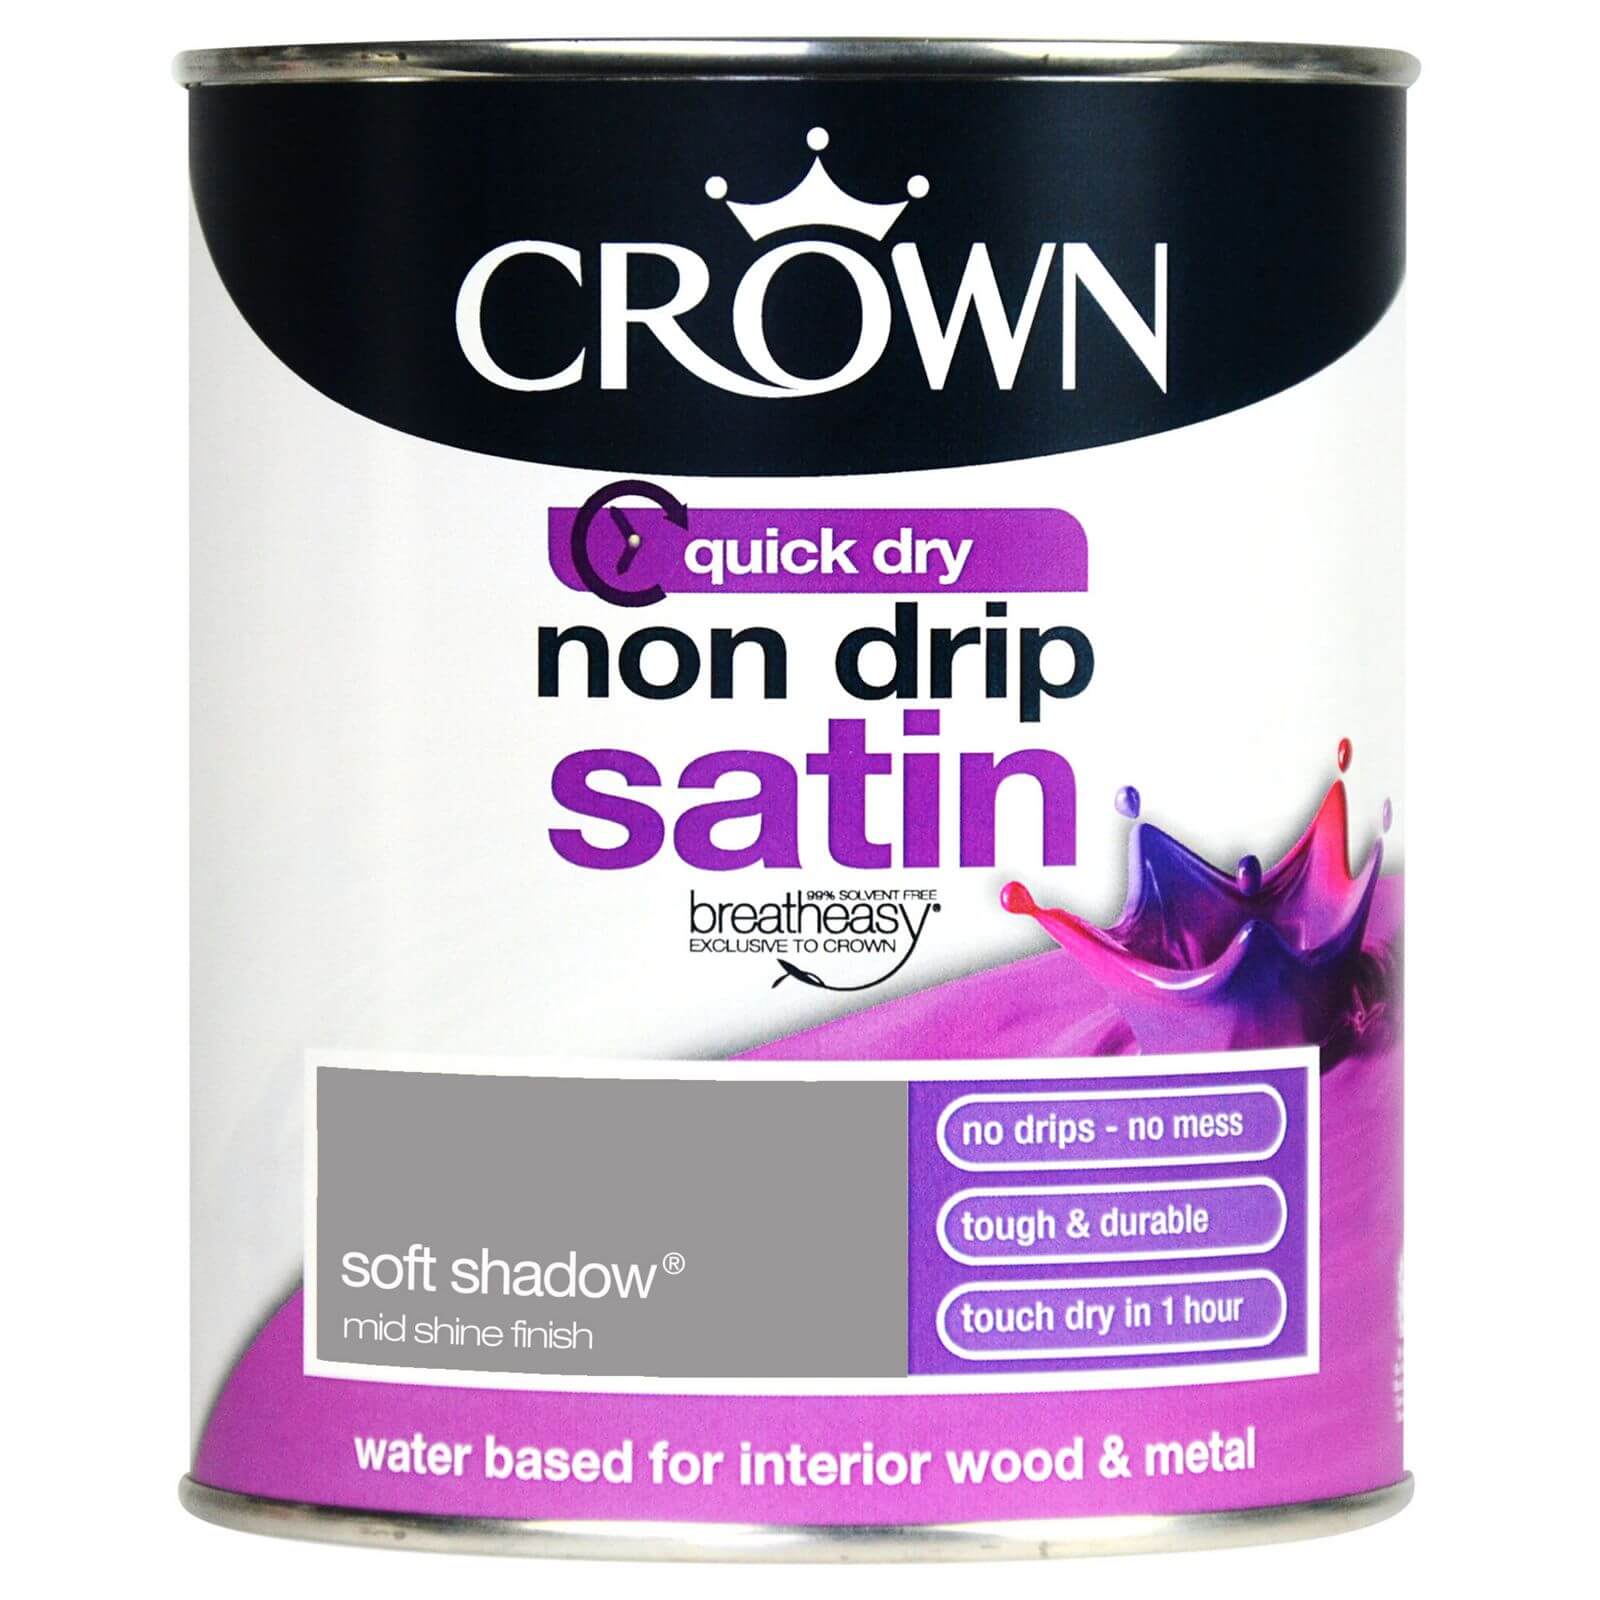 Crown Standard Breatheasy Non Drip Satin Paint Soft Shadow - 750ml